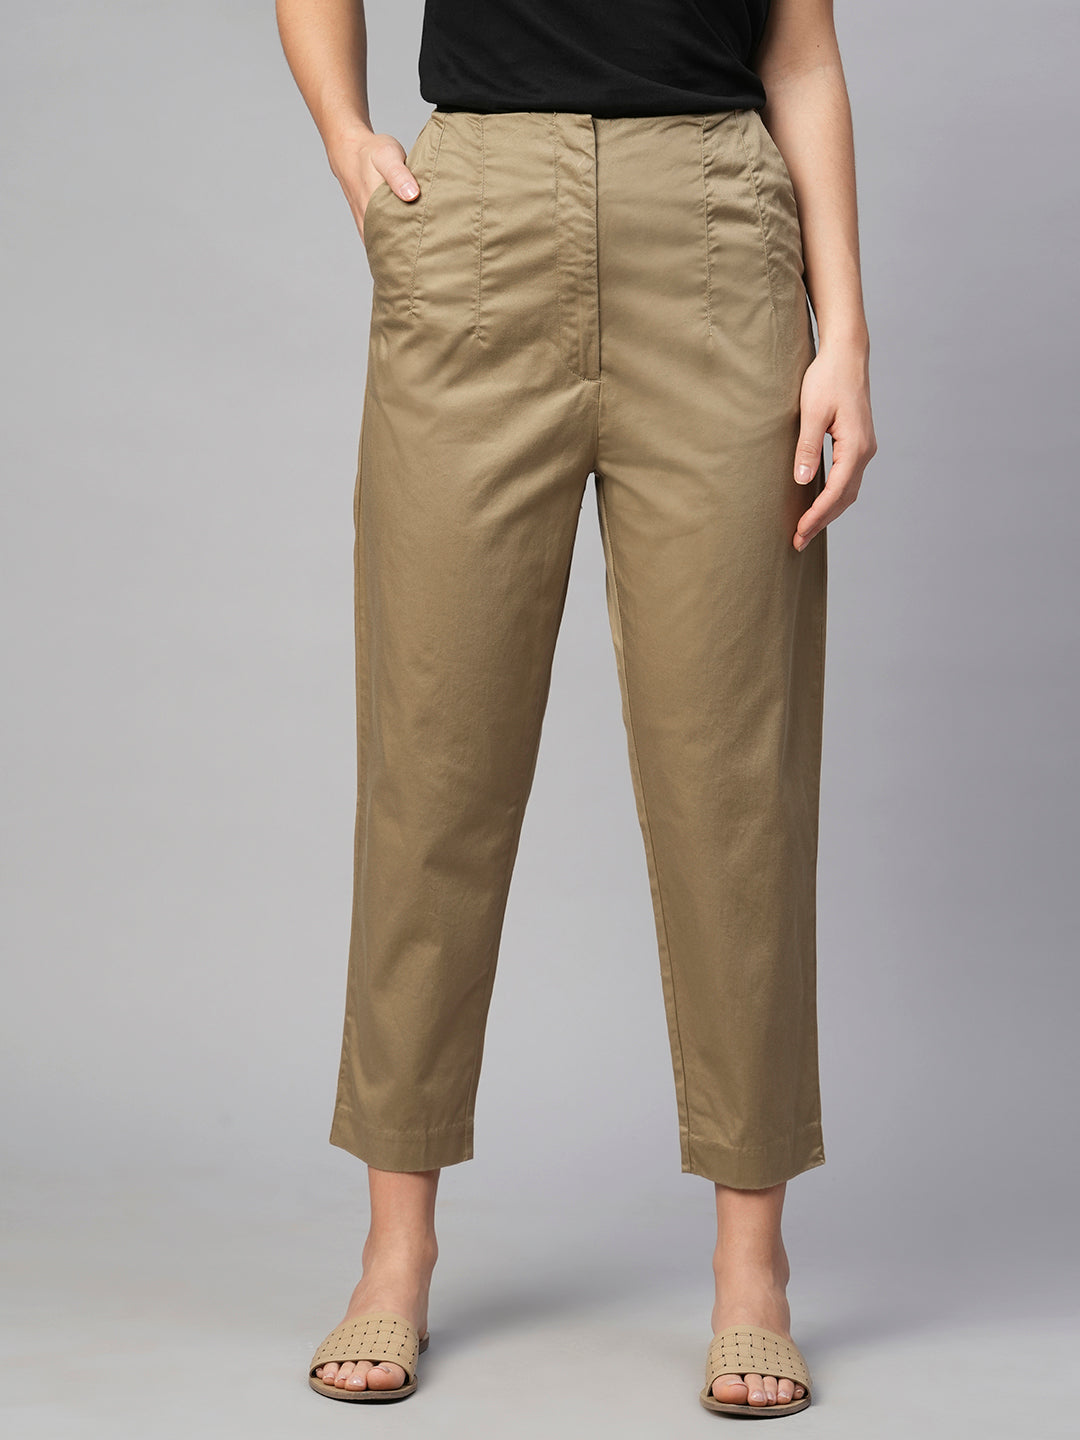 Women's Khaki Cotton Elastane Slim Fit Pant